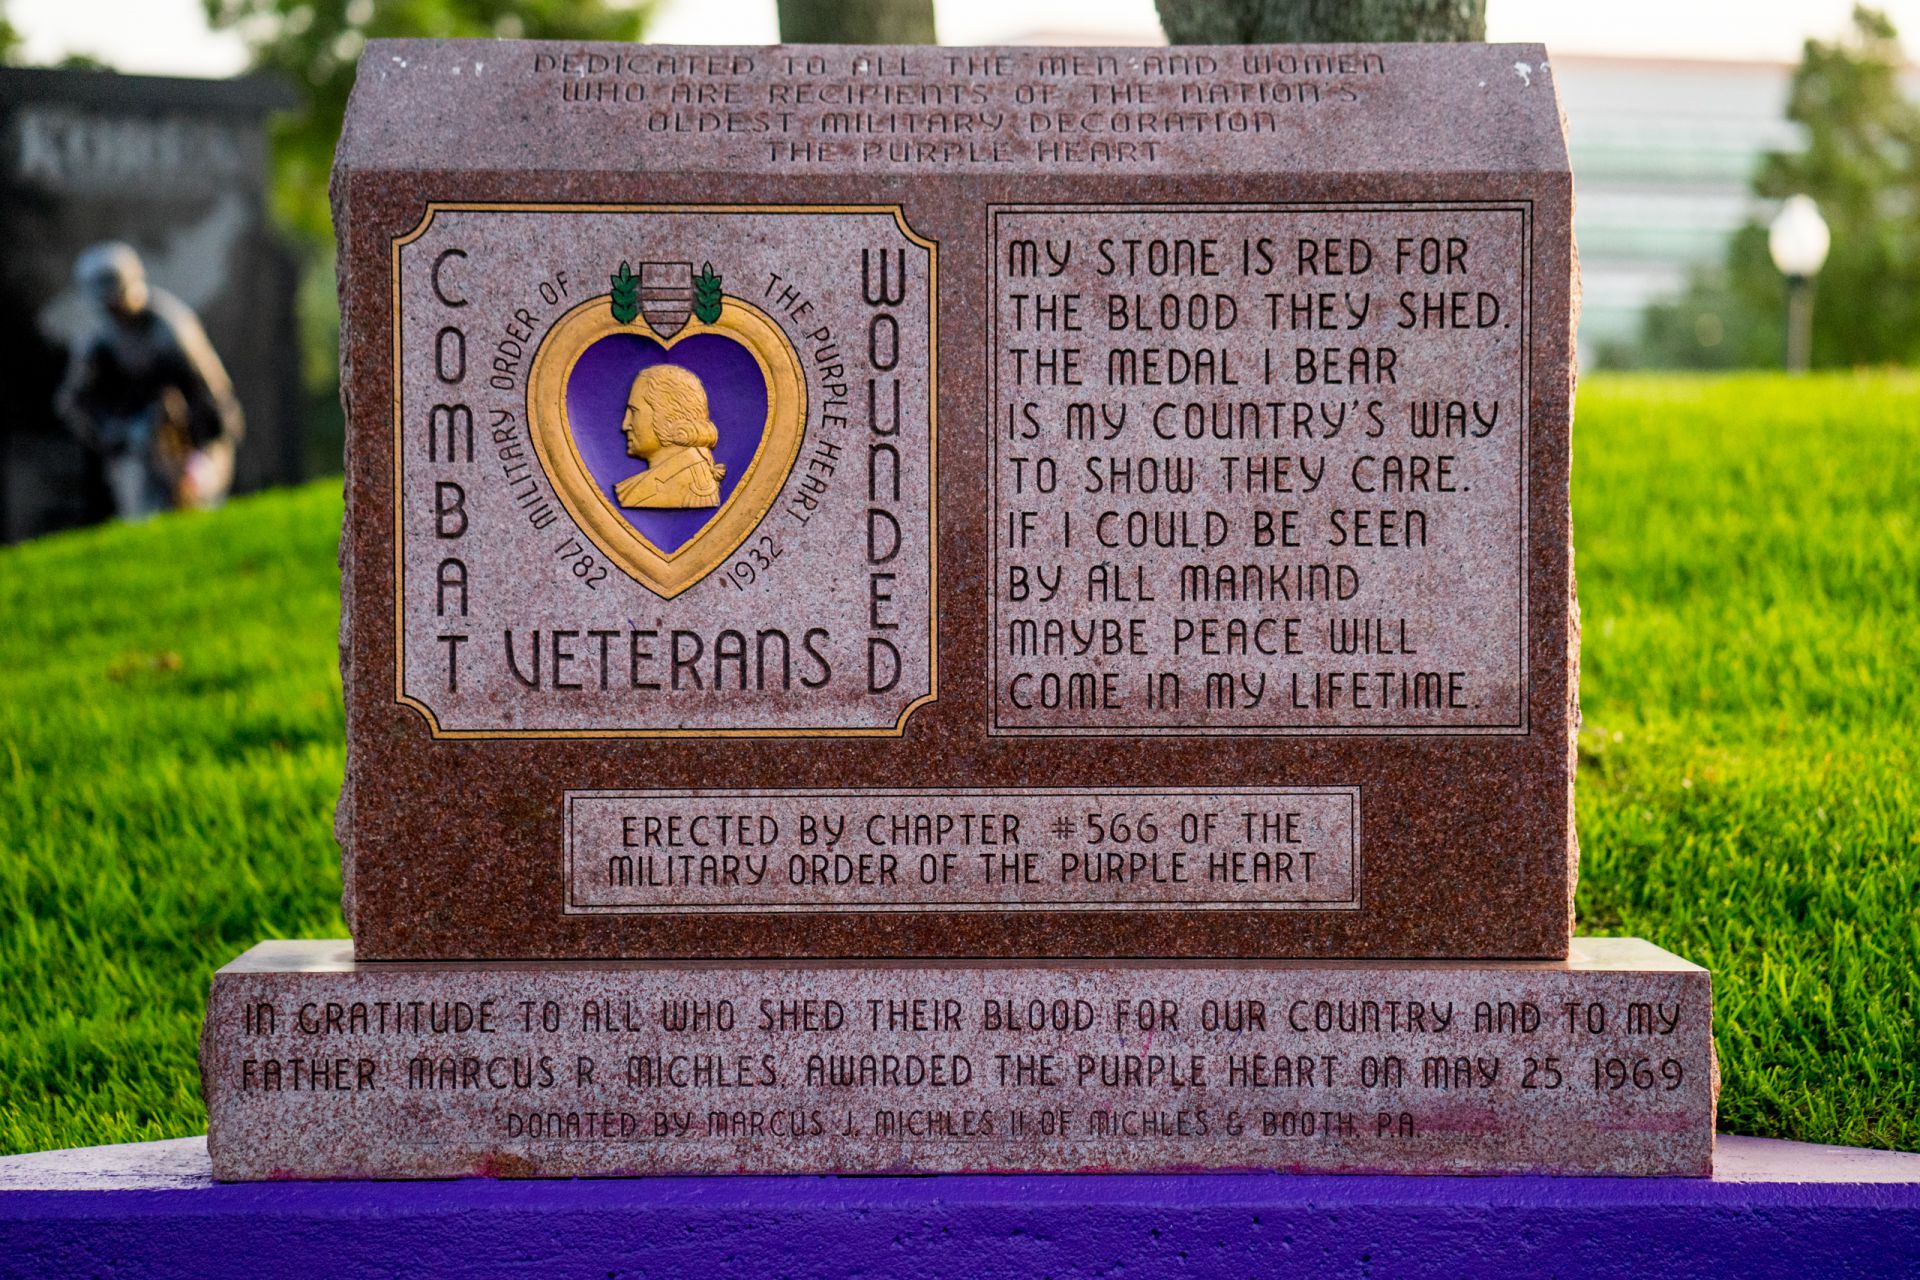 Purple Heart Memorial